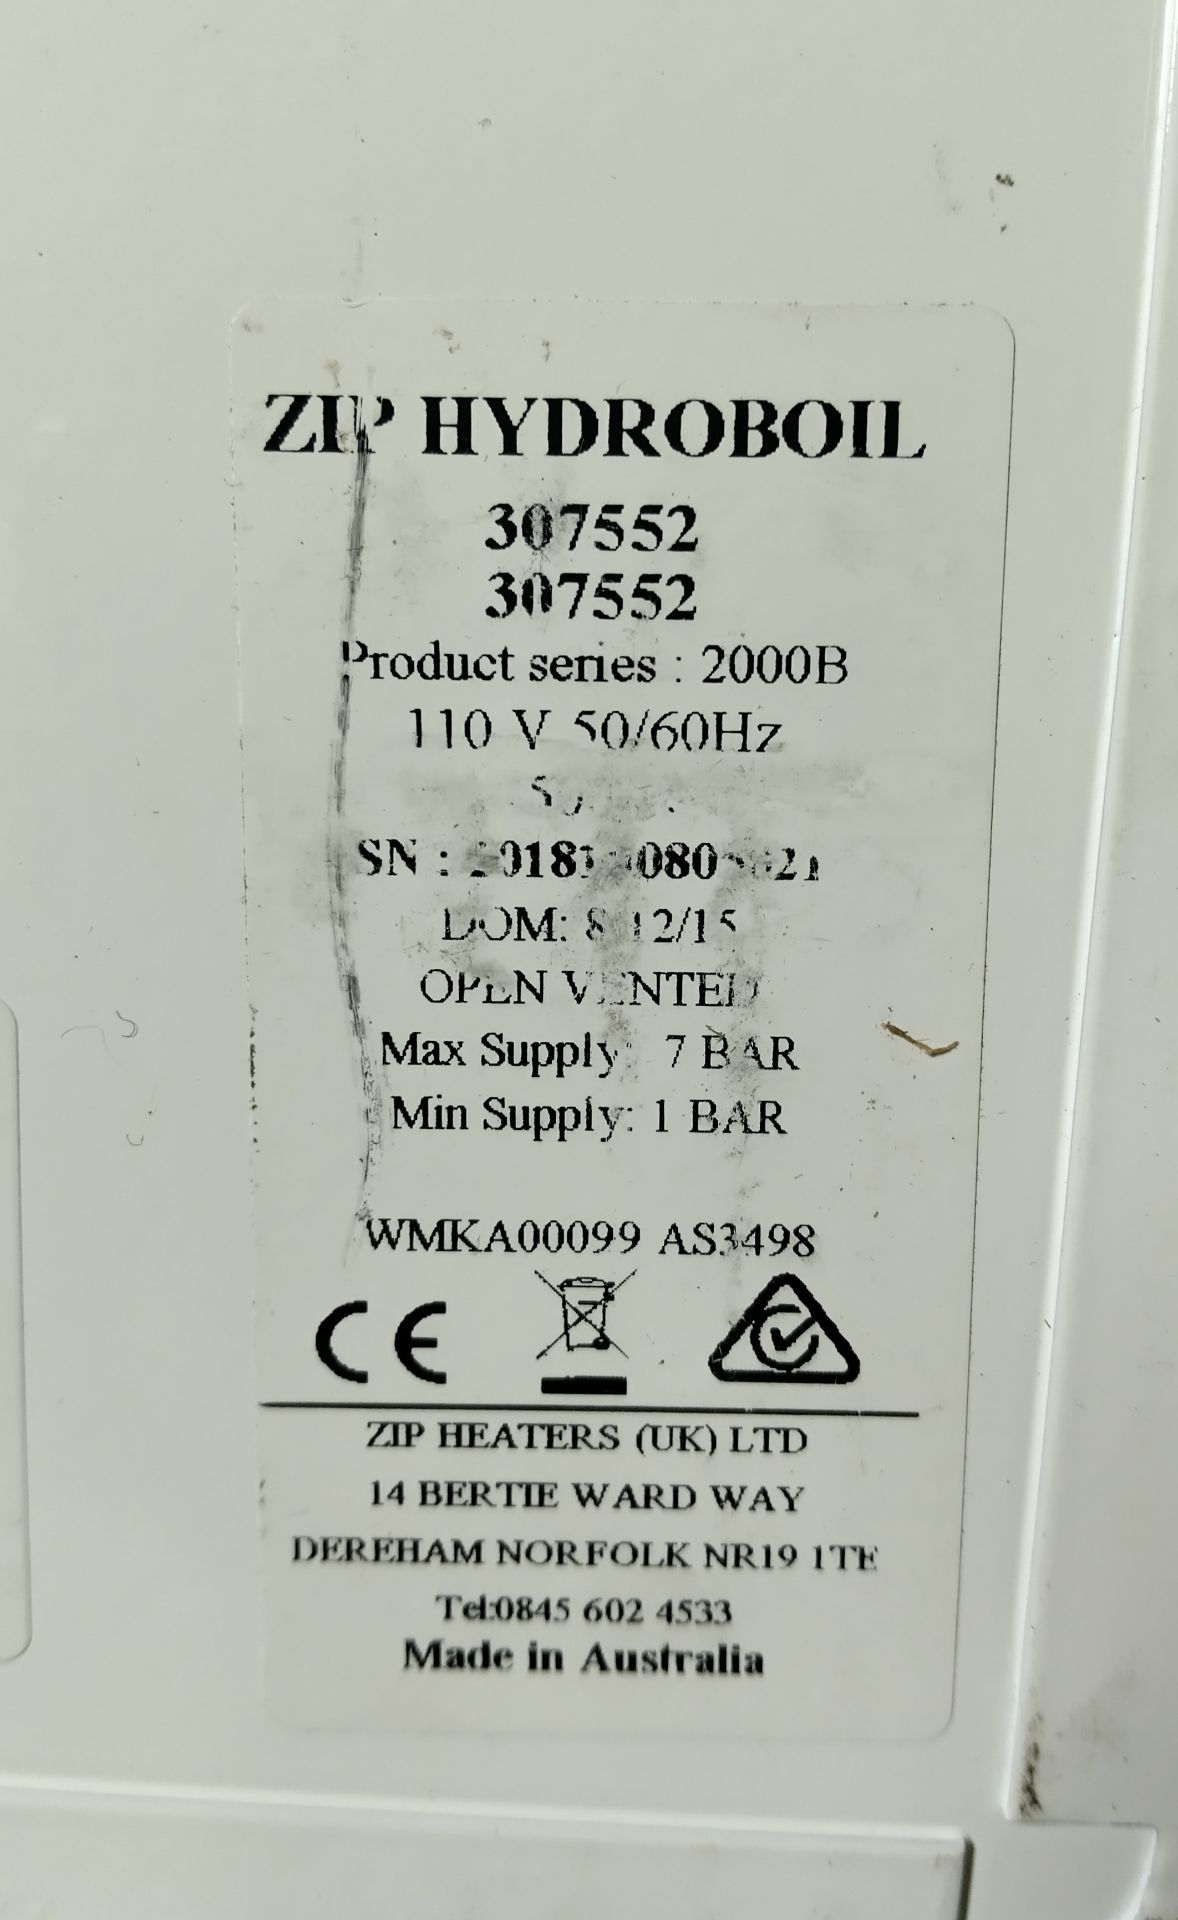 Zip Hydroboil 307552 - water heater 7.5 ltr - 110V - 1500W - W 320 x D 270 x H 580mm - Image 4 of 5